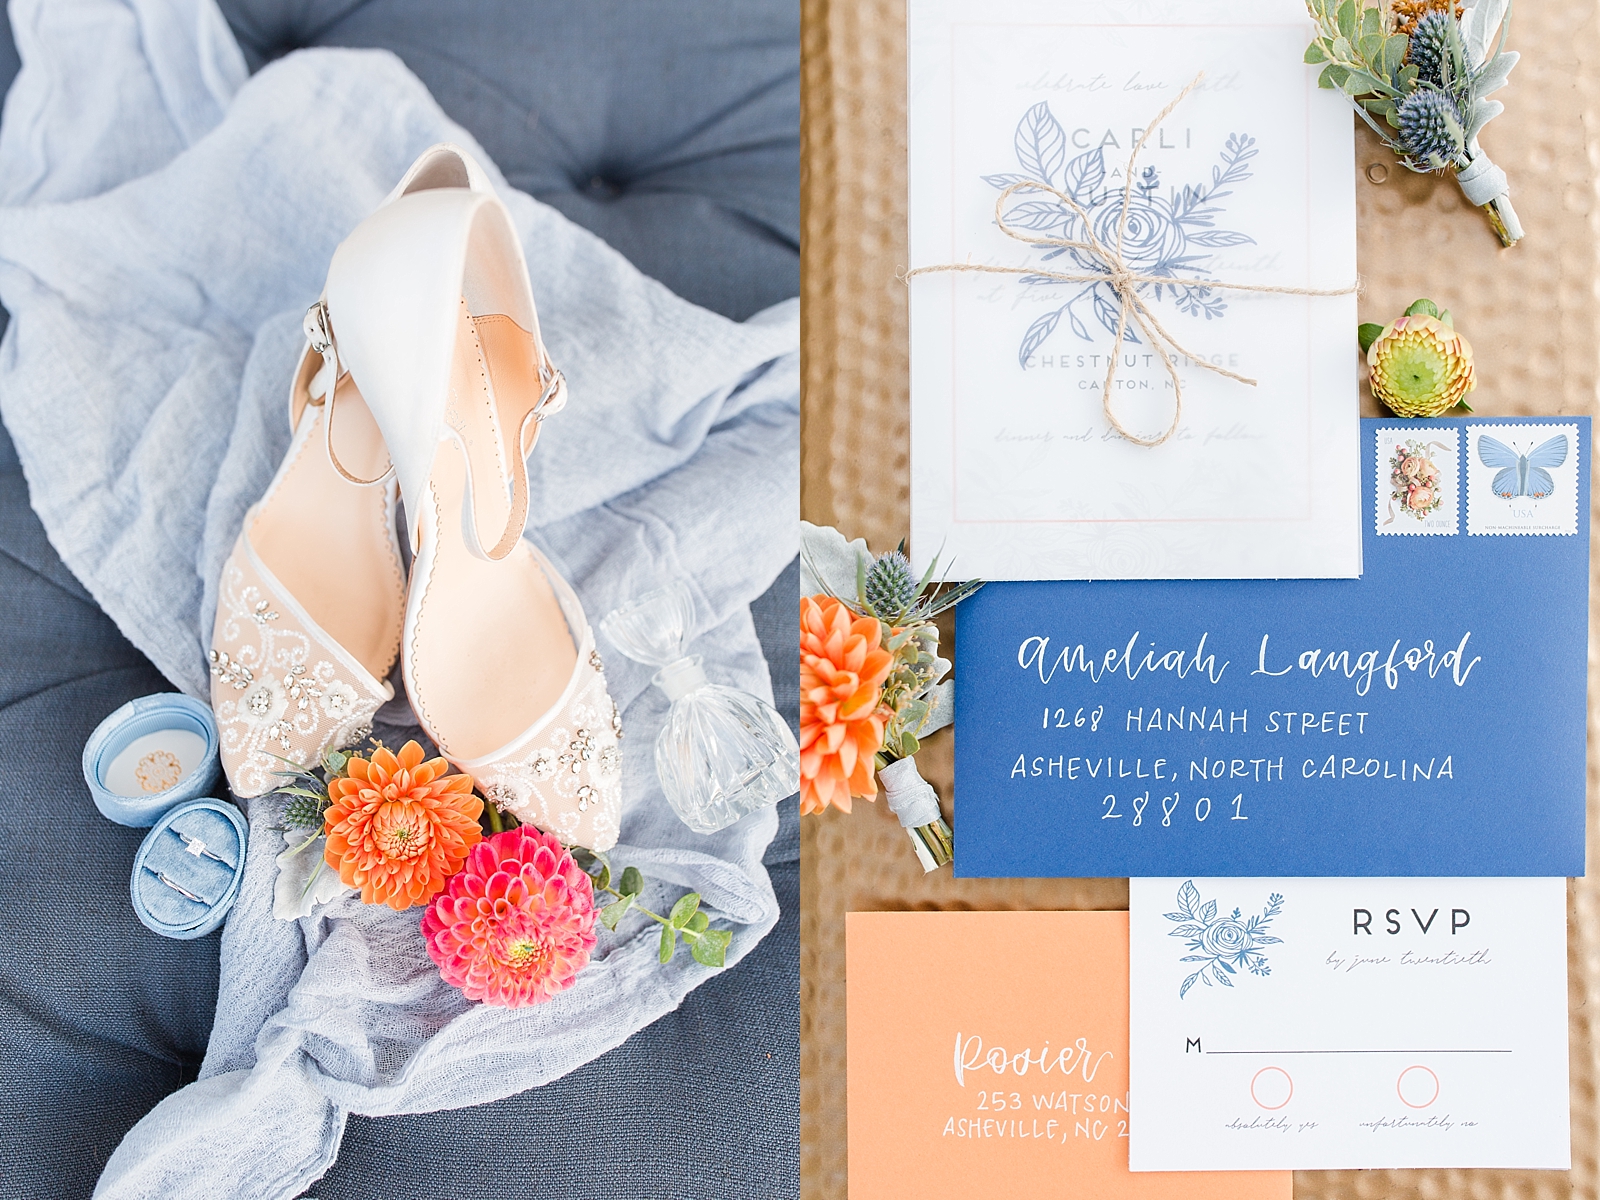 Chestnut Ridge Wedding bridal shoes wedding rings orange and pink flowers and invitation lay flat Photos